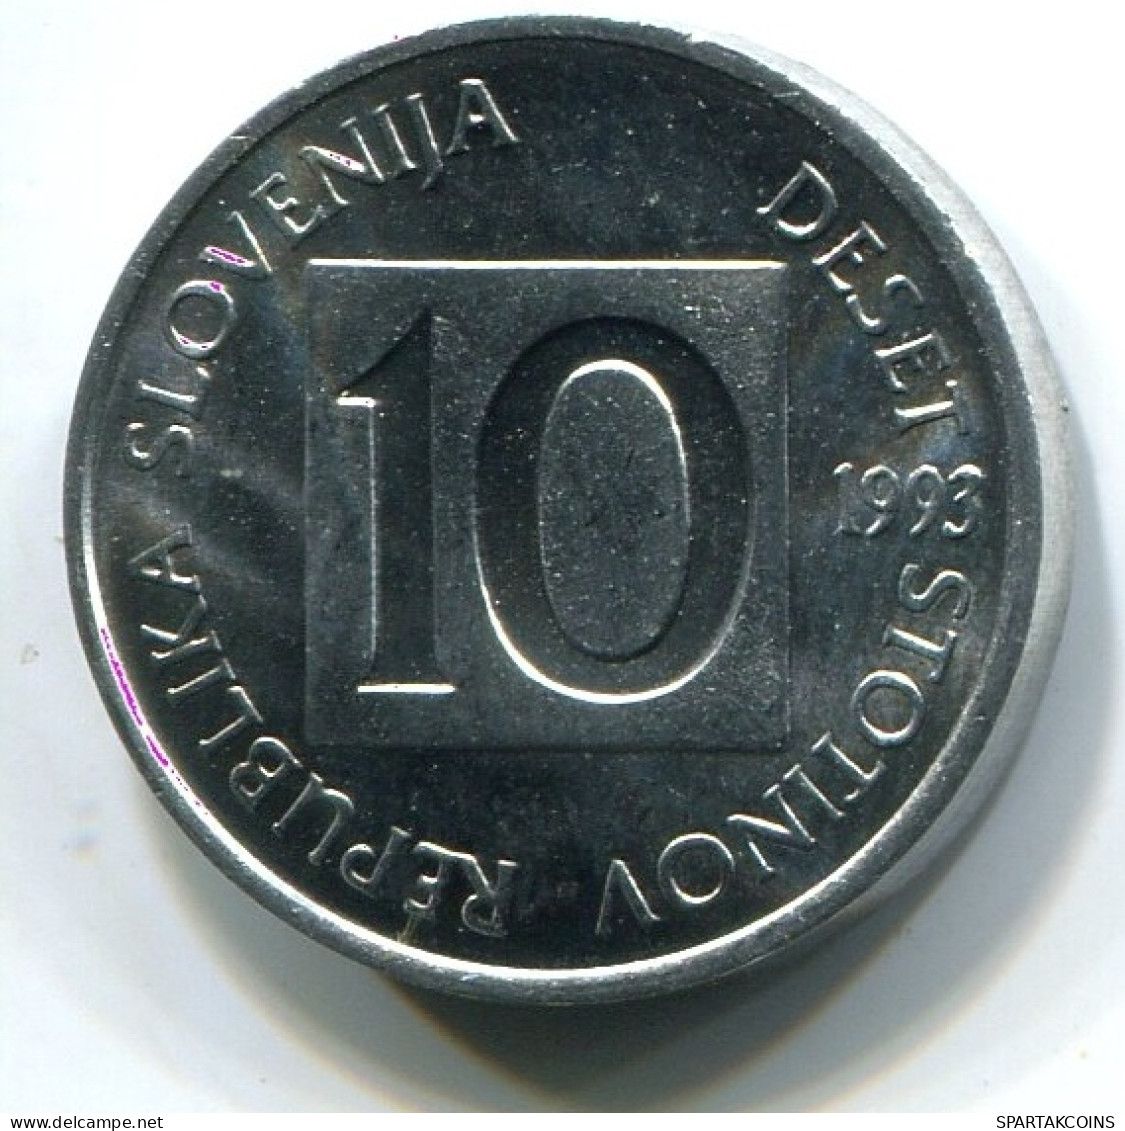 10 TOLAR 1993 SLOVENIA UNC The Salamander Coin #W10916.U - Slovenia